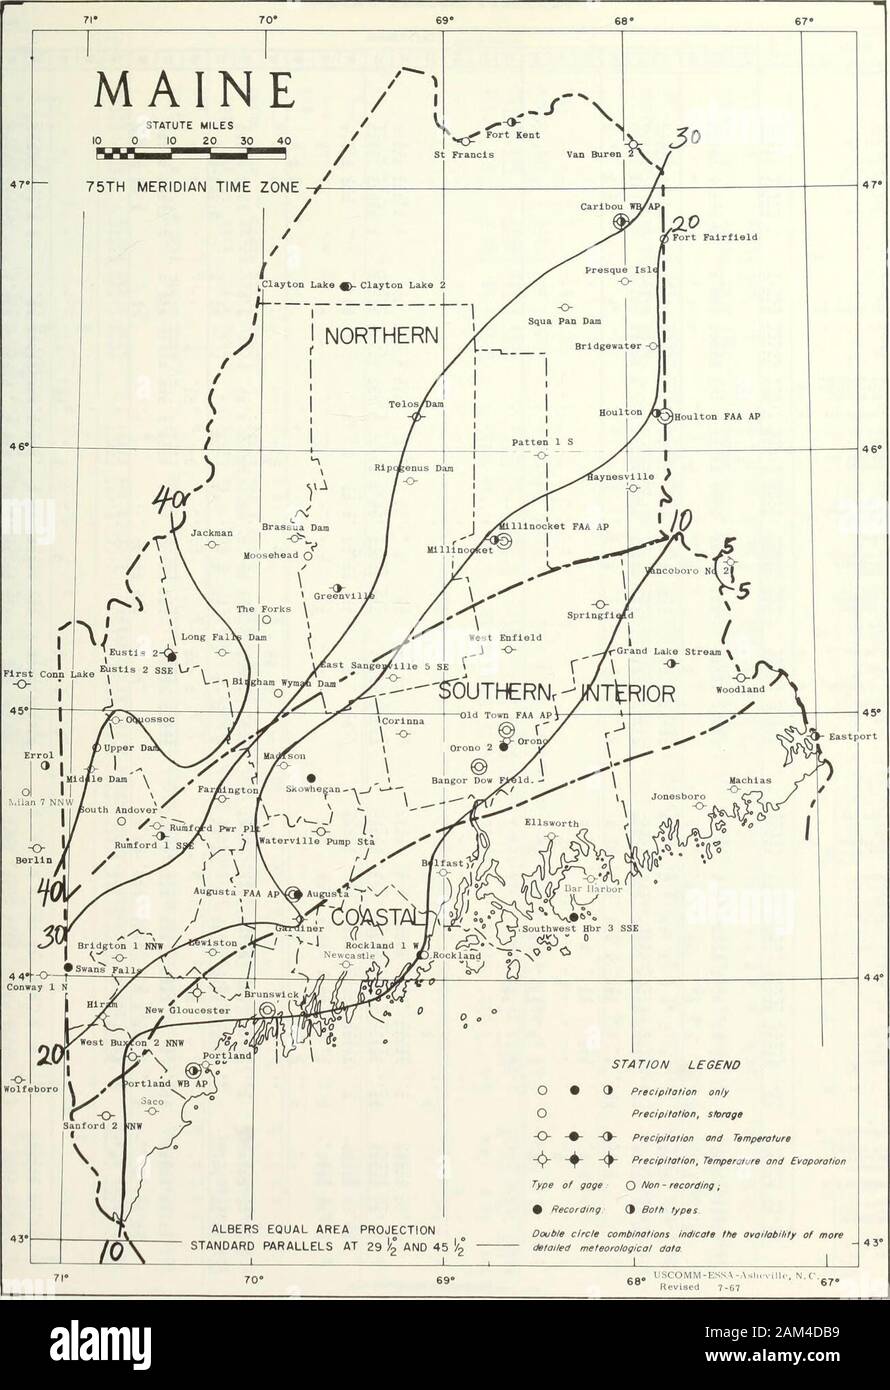 Climatological data, New England . DECEMBER 1968 - TOTAL SNOWFALL (INCHES). , II I 111]IIIIll ,1 I ID IN DAILY PRECIPITATION CONNECTICUT NDKTHVEST BAKERSVKIEBARKHANSTEDBULLS BUI DOE DAHCREAH HUl.FALLS VILLAGE NORFOLK 2 SUROCKY RIVER DAMSHEPAJC DADTORRINCTDNVICUAH RESERVOIR 5.27 Day of Month 02 MOOOBURV CENTRAL ANSONU 1 NE BALTIC BROOKLYN BURLINGTON COCKAPONSET RANCE STA COLCHESTER 1 ECOVENTRYDAN8URYOAKSDN LAKEEASTF3RD EASTDN LAKE RESERVOIR HARTFORD BRAINARD FLO //R HARTFORD HB AIRPORT R MANCHESTER MANSFIELD HOLLOW DAM R MIDOLETOMN i, VMOUNT CARMELNORTH GUILFORDNORWICH PUB UTIL PLTPAUCHAUC FORE Stock Photo